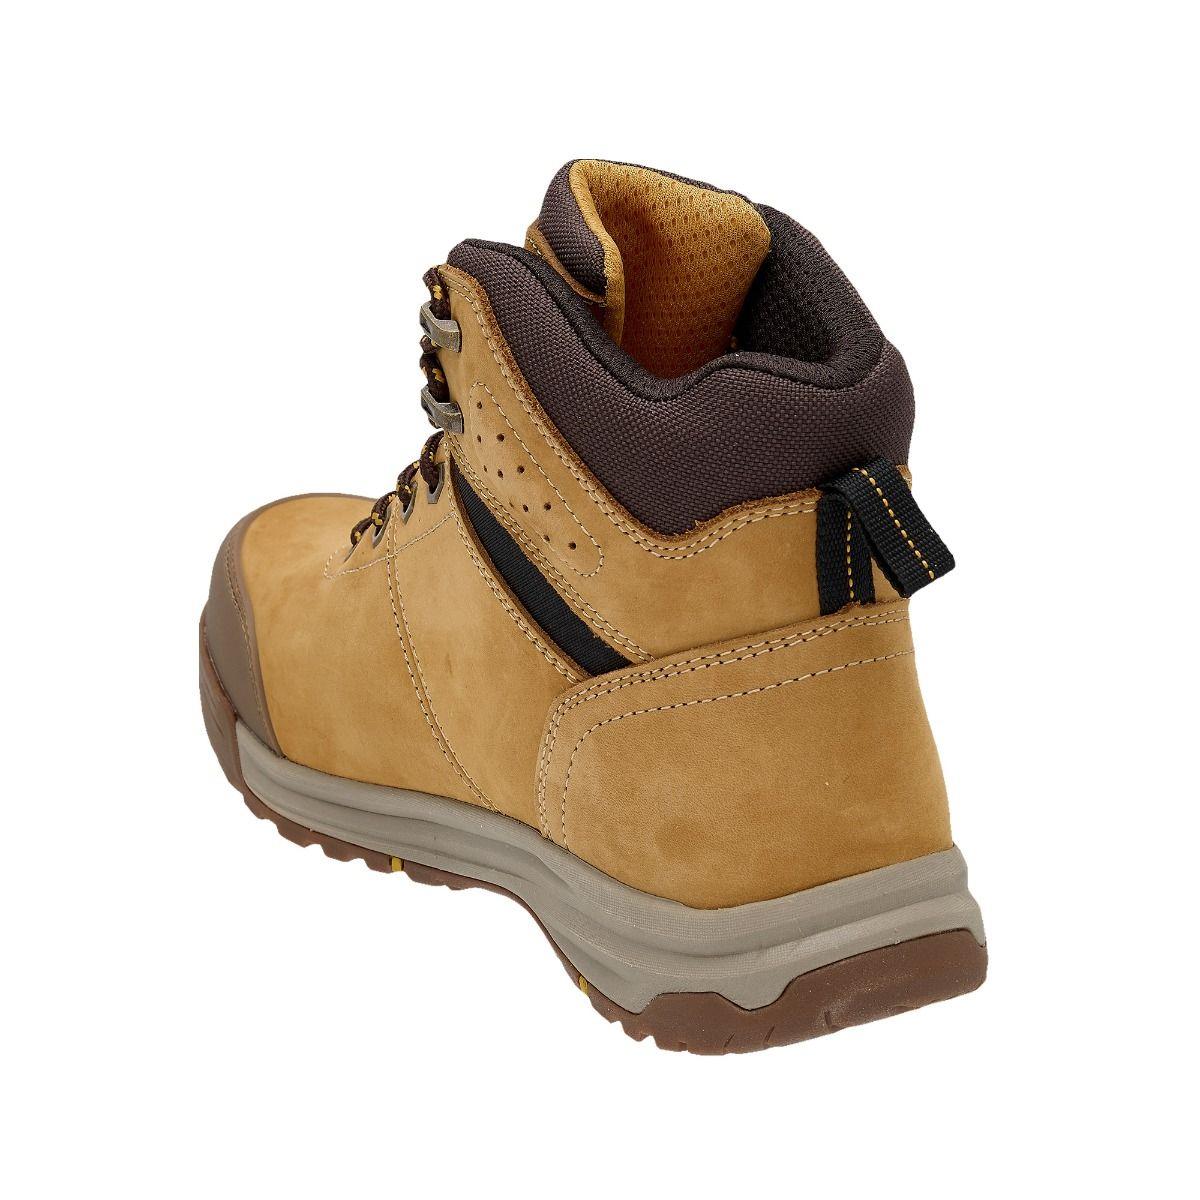 DeWalt Summit S3 wheat nubuck steel toe water resistant work safety boots